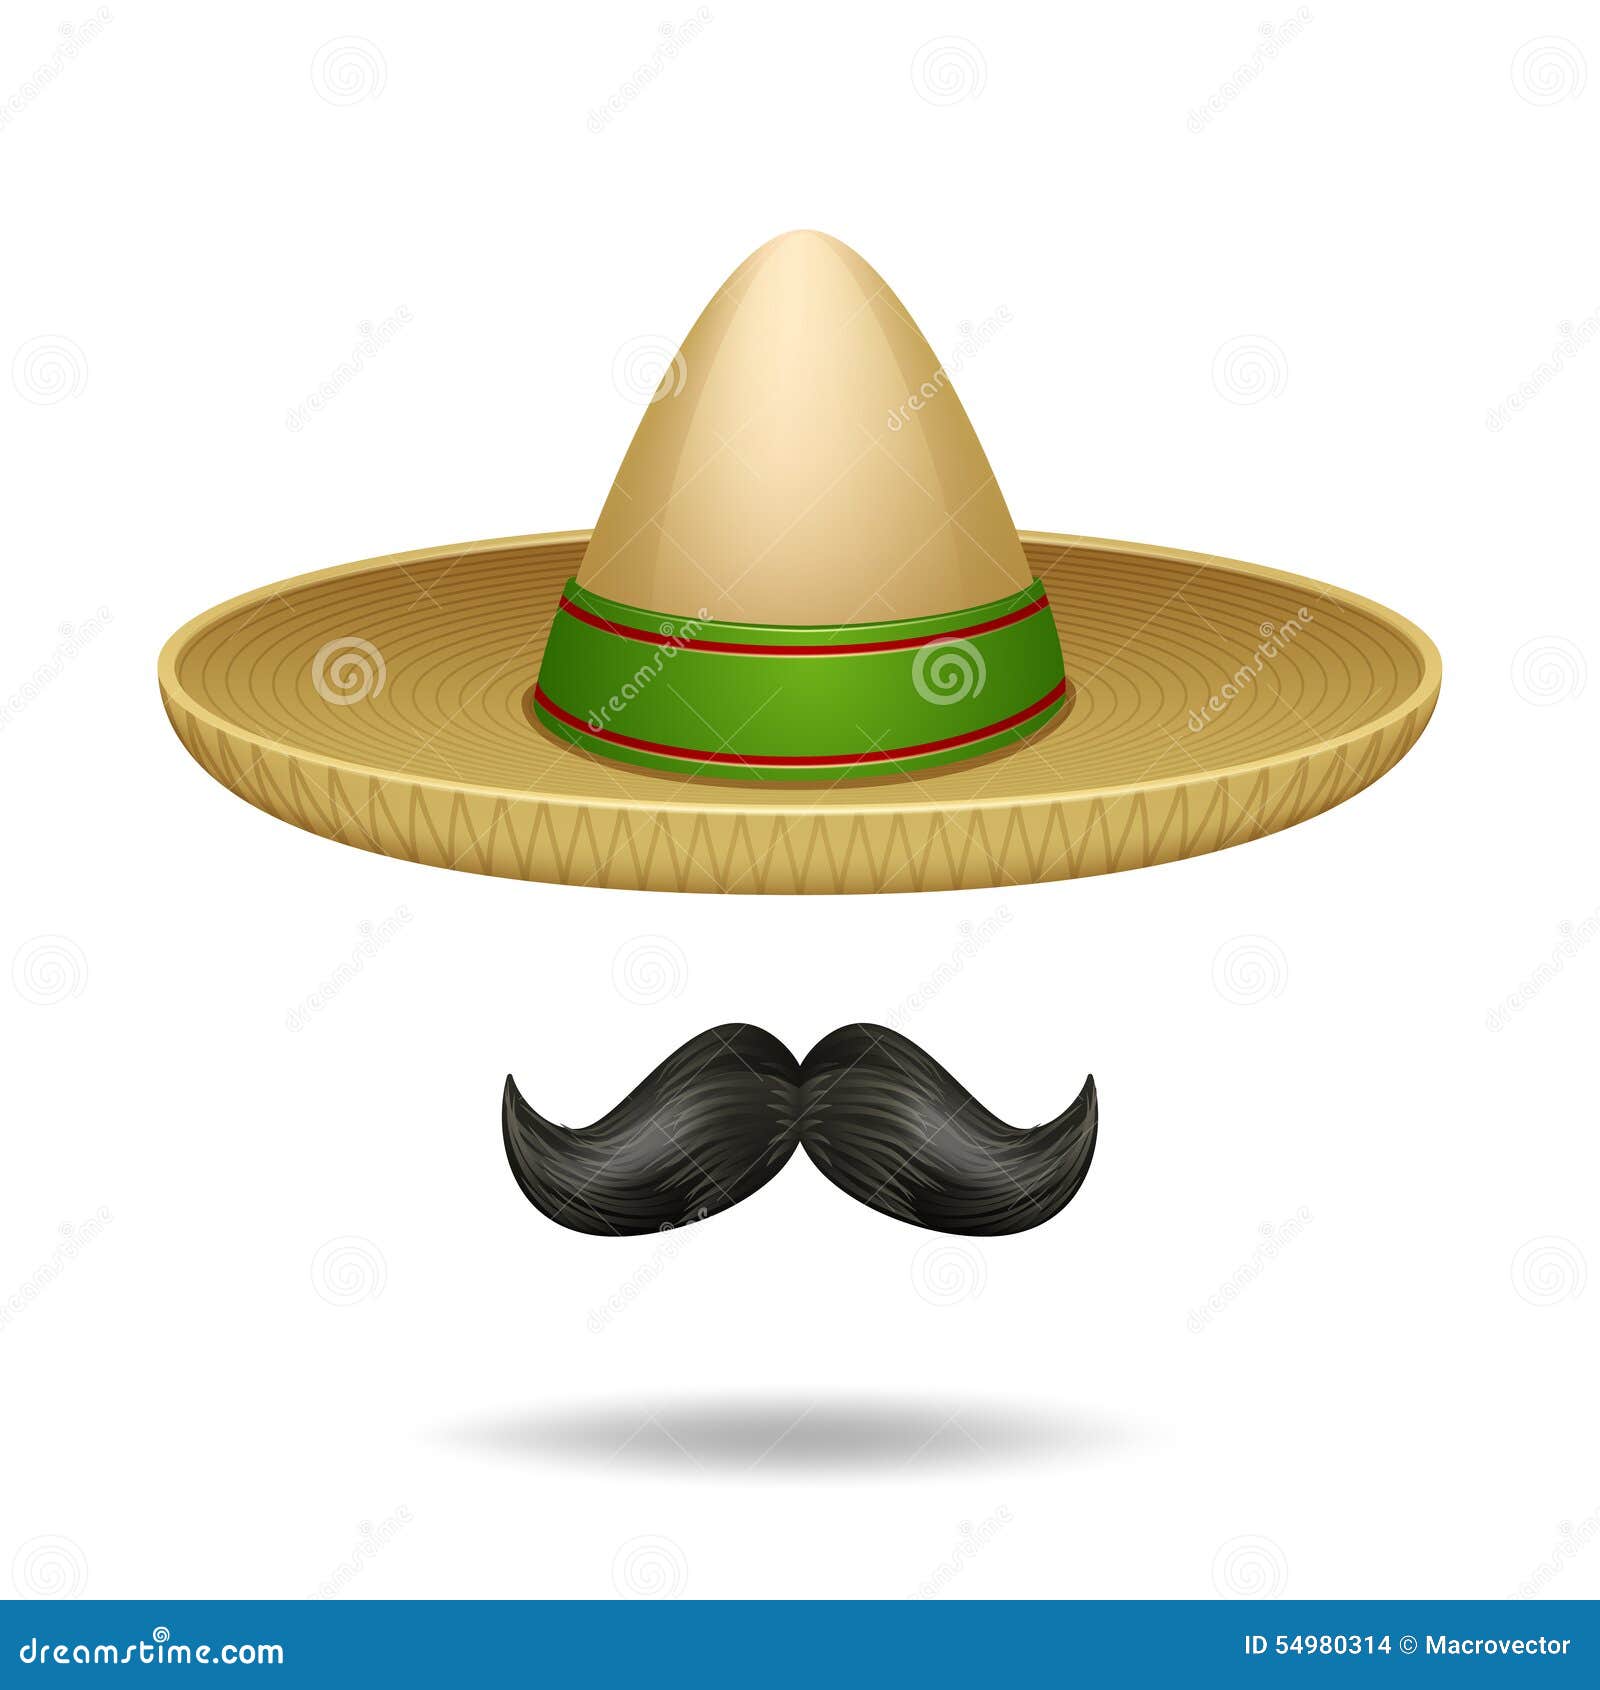 sombrero and mustache